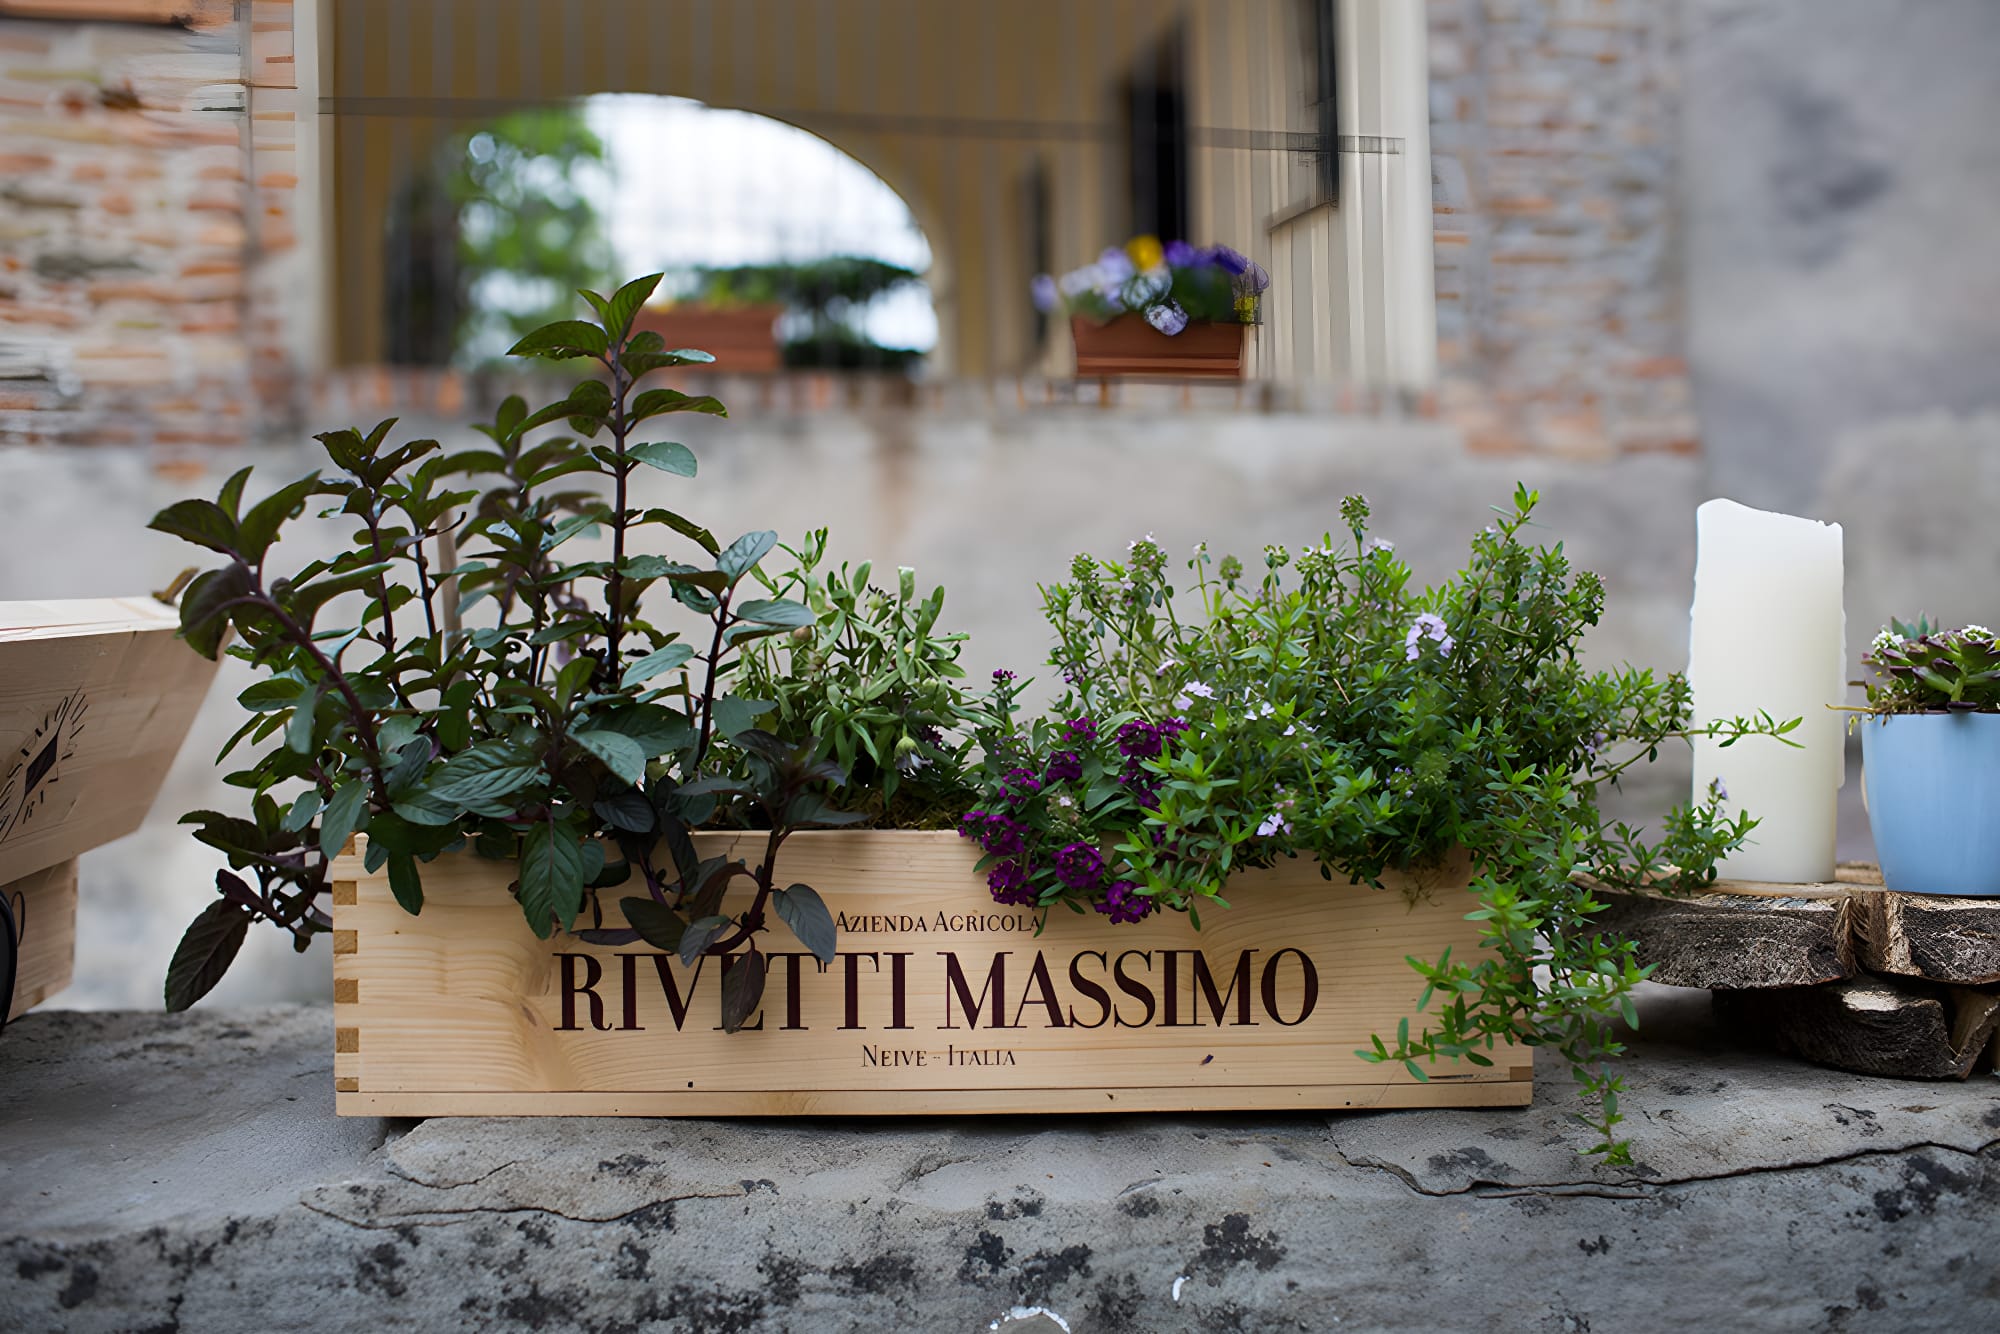 Maak kennis met Massimo Rivetti